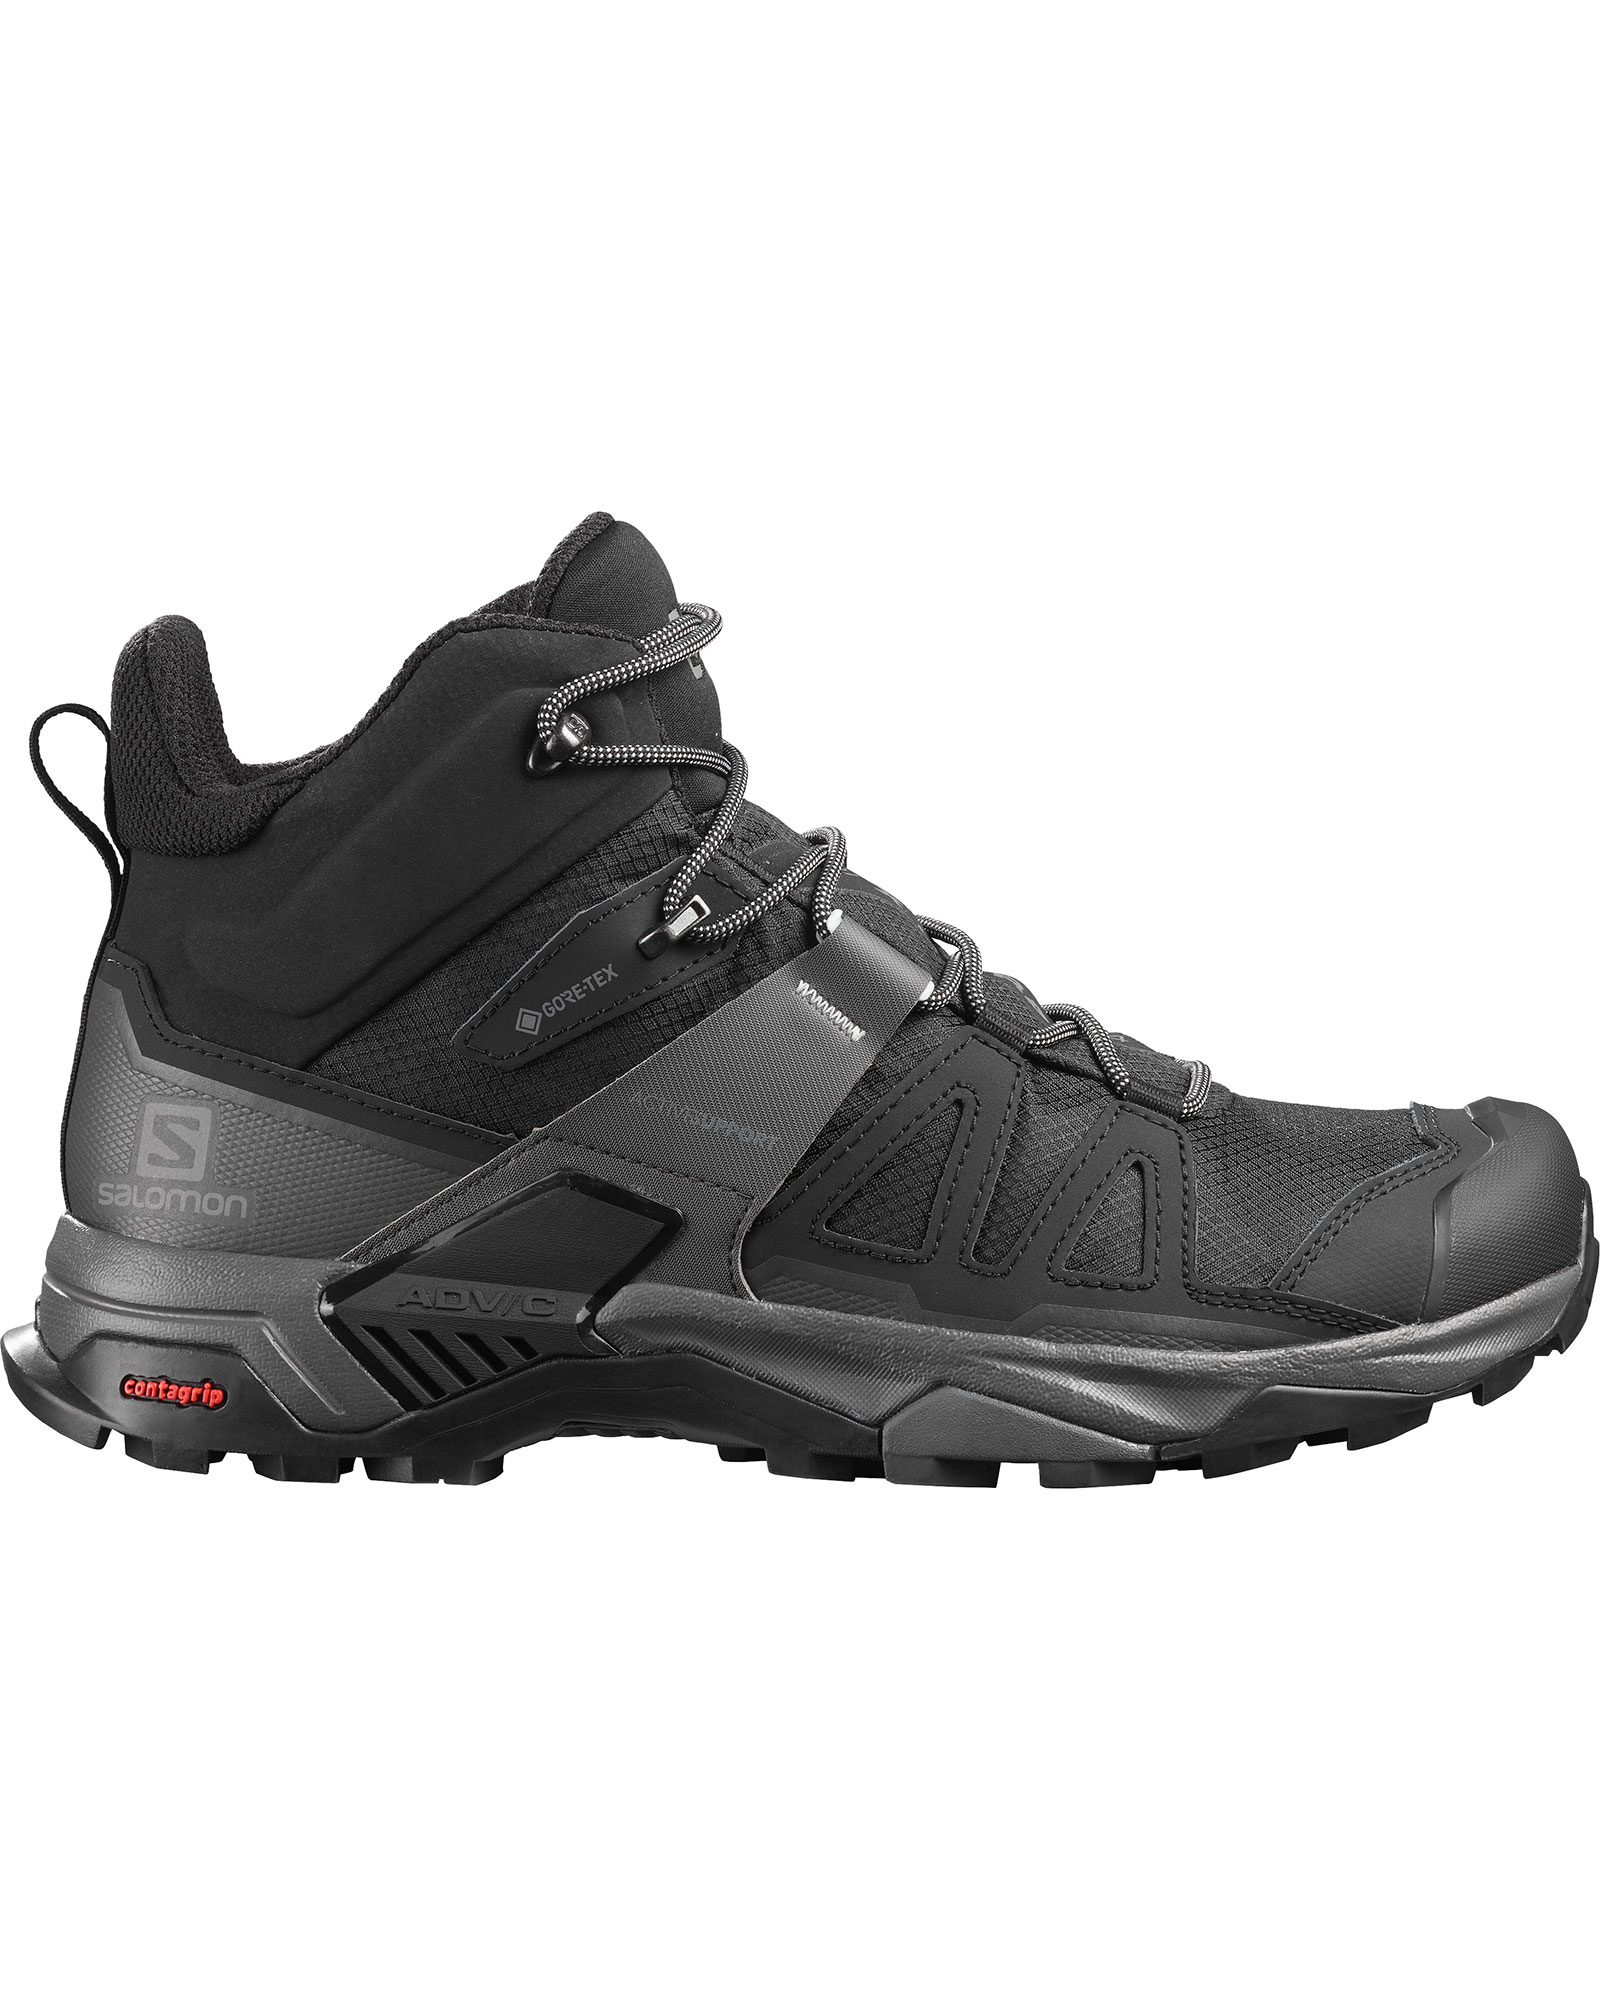 Salomon X Ultra 4 Mid GORE TEX Men’s Boots - Black/Magnet/Pearl Blue UK 7.5